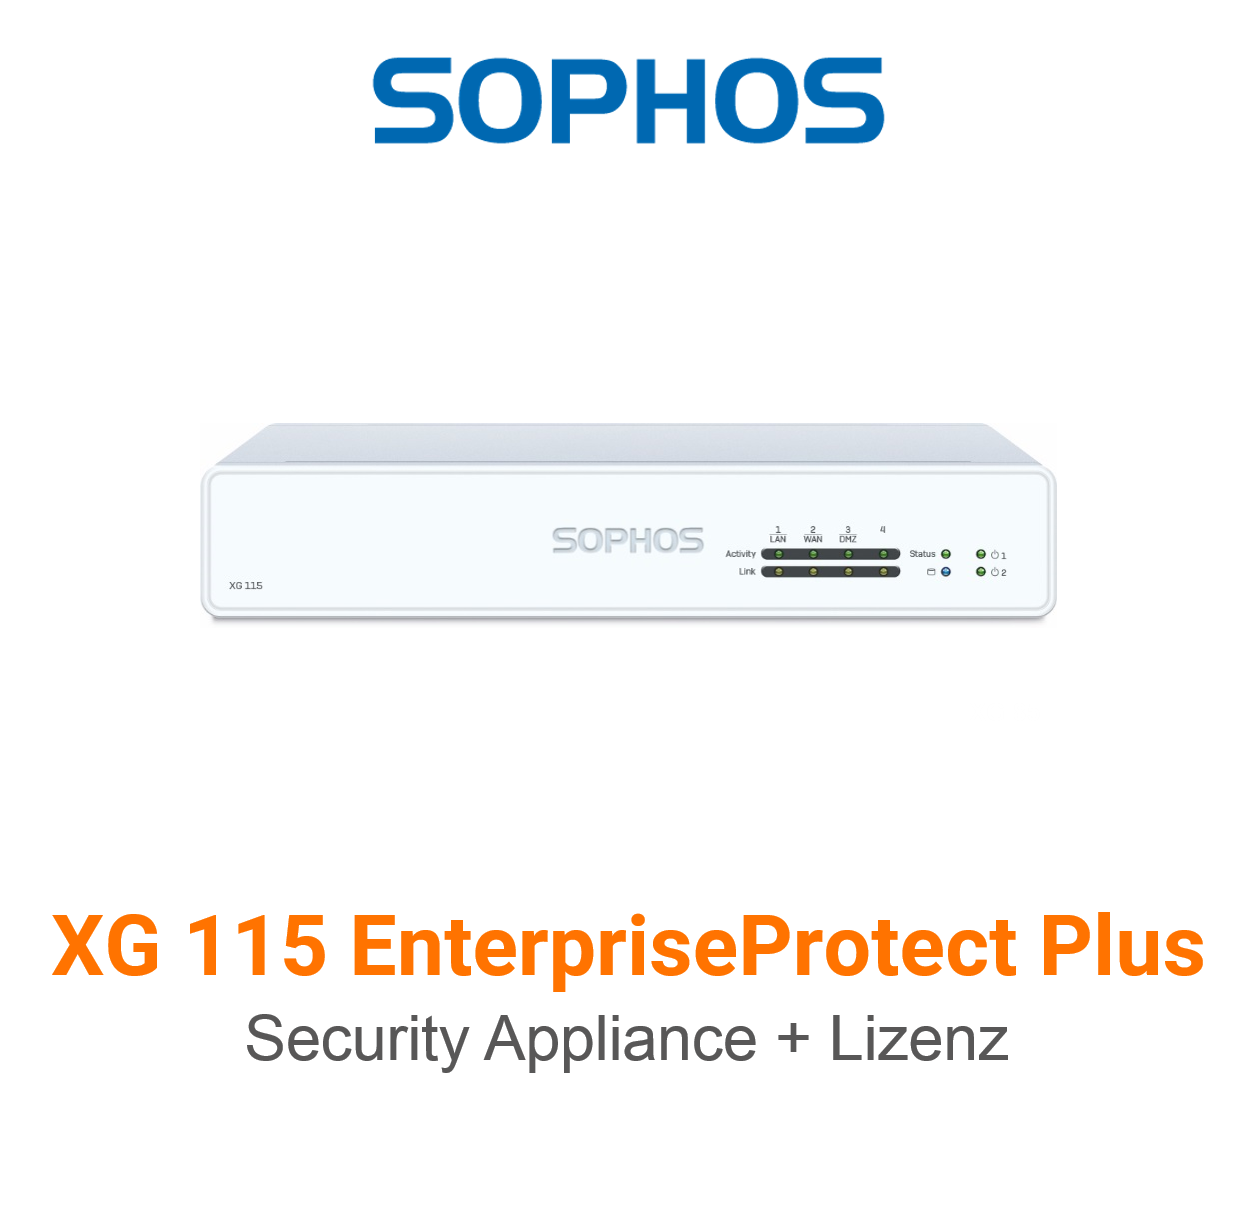 Sophos XG 115 EnterpriseProtect Plus Bundle (Hardware + Lizenz)